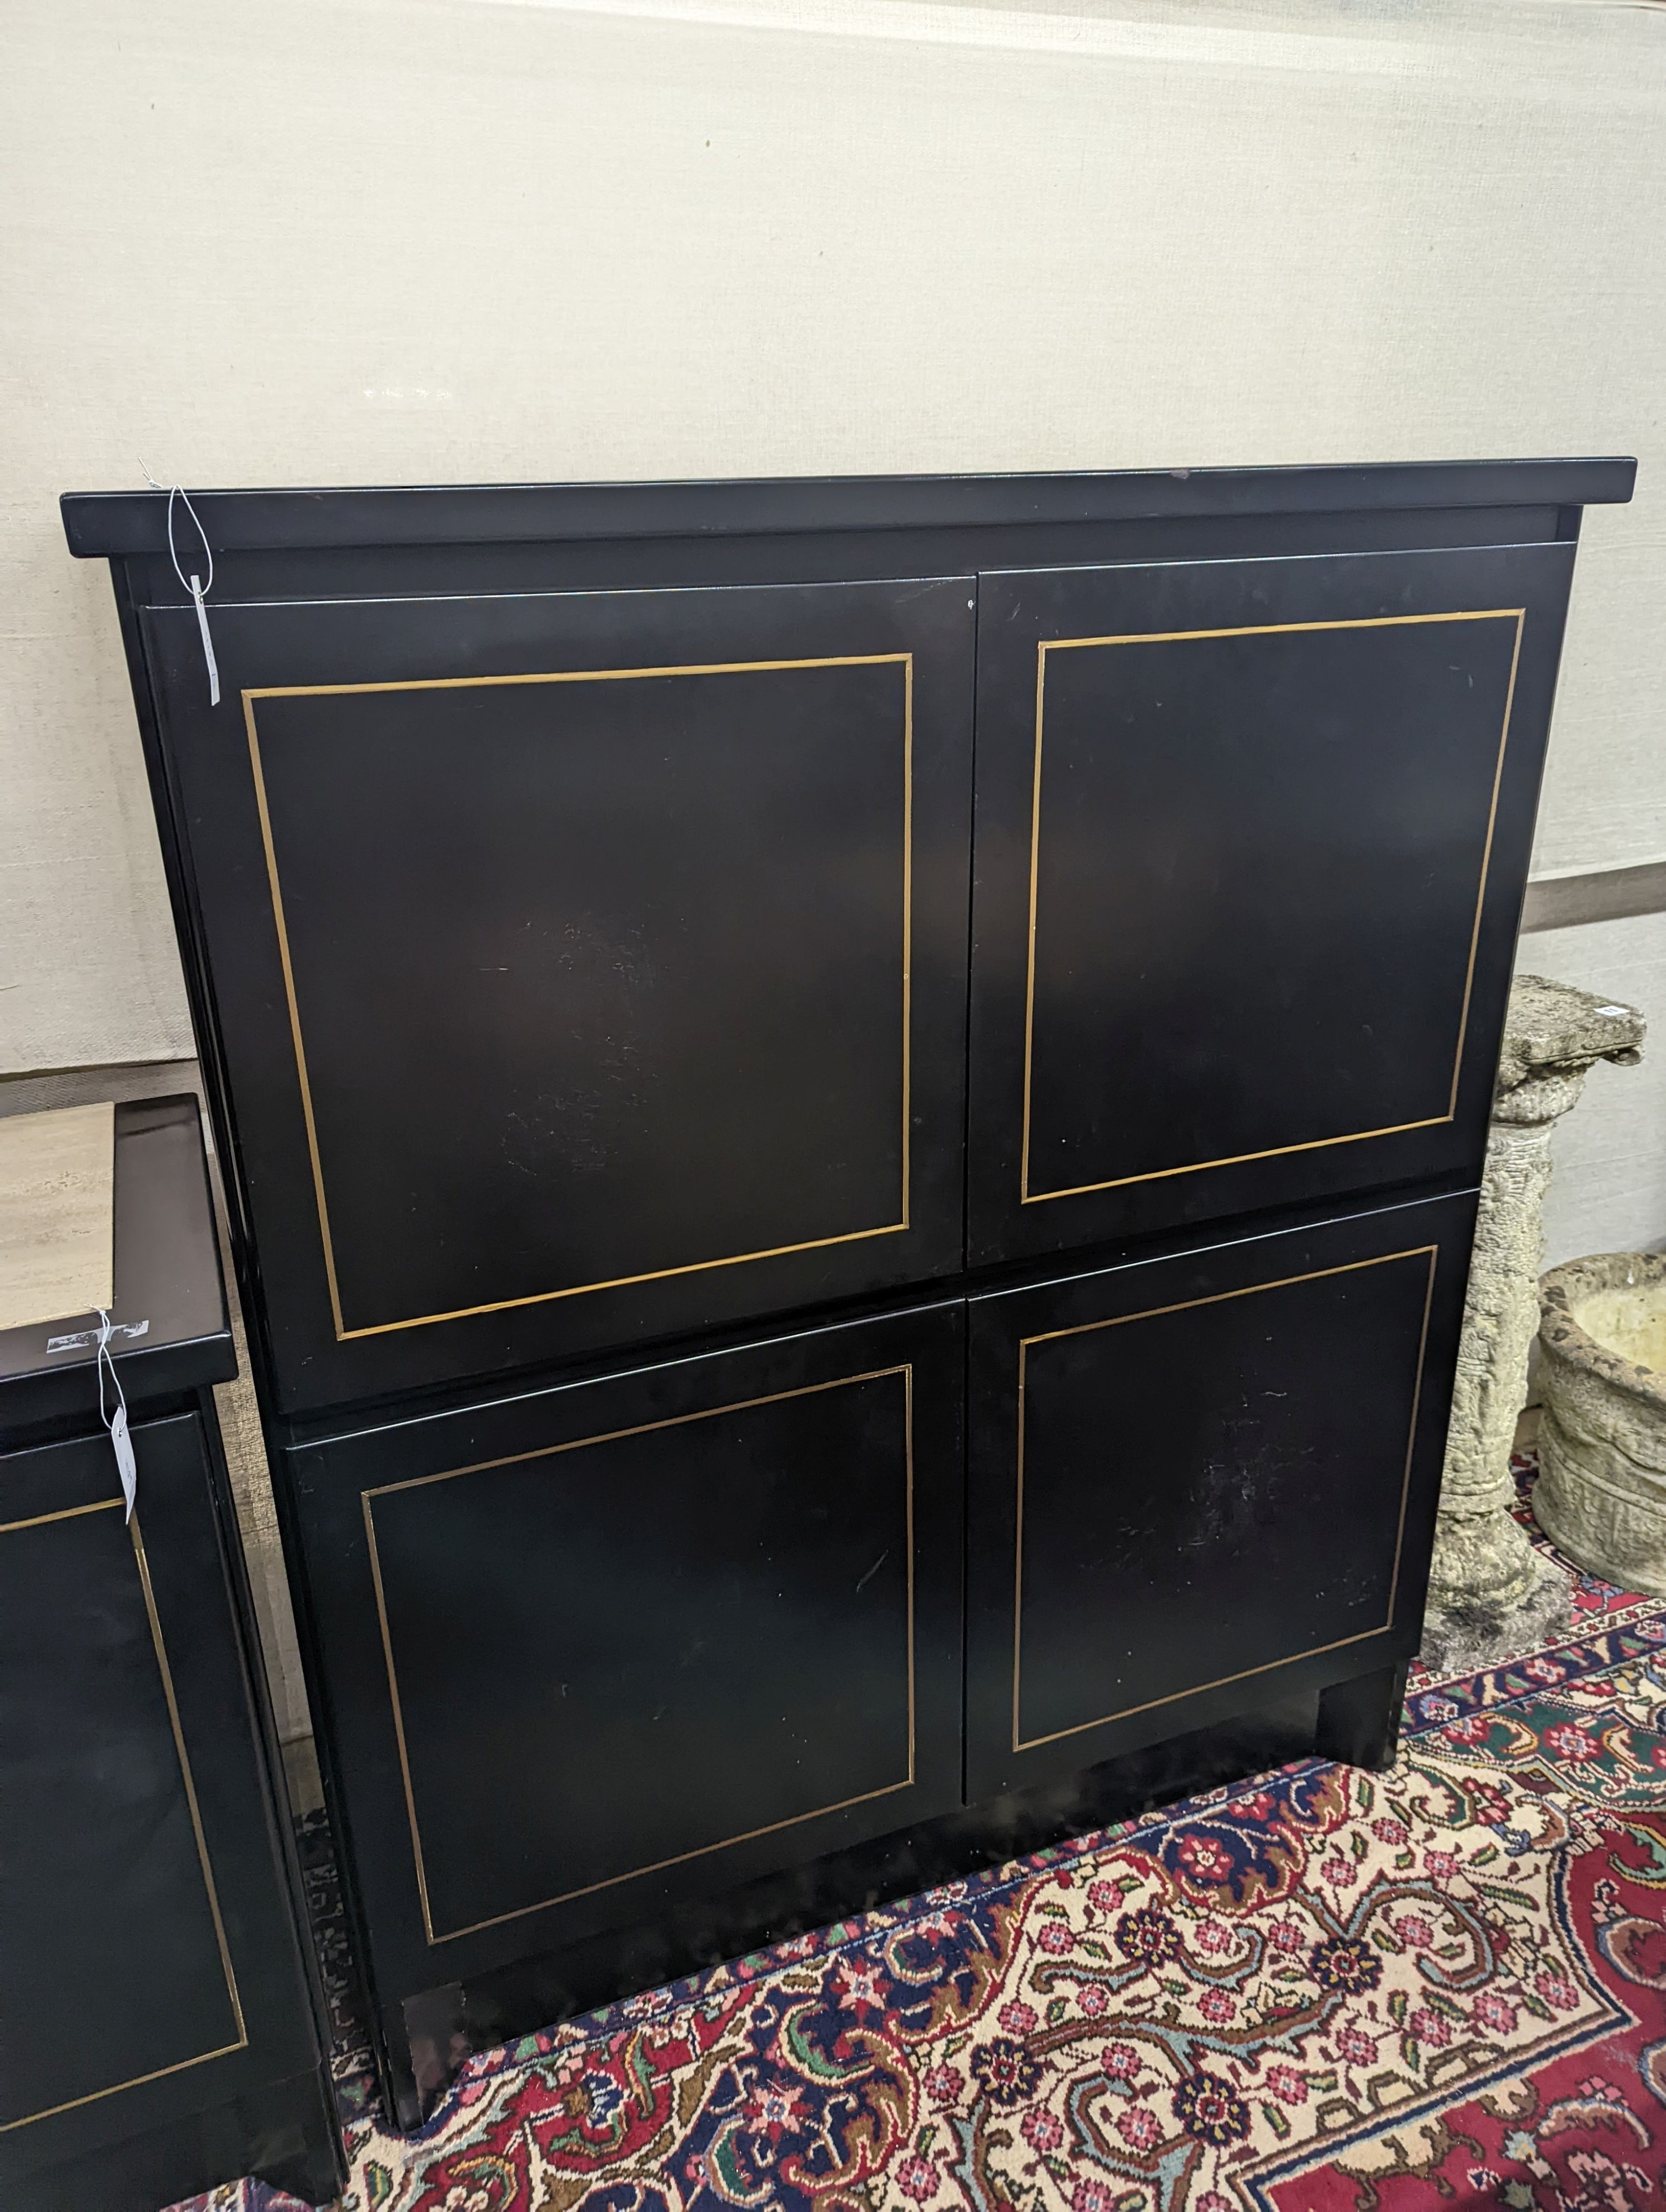 A 20th century black lacquer four door side cabinet, width 115cm, depth 45cm, height 135cm